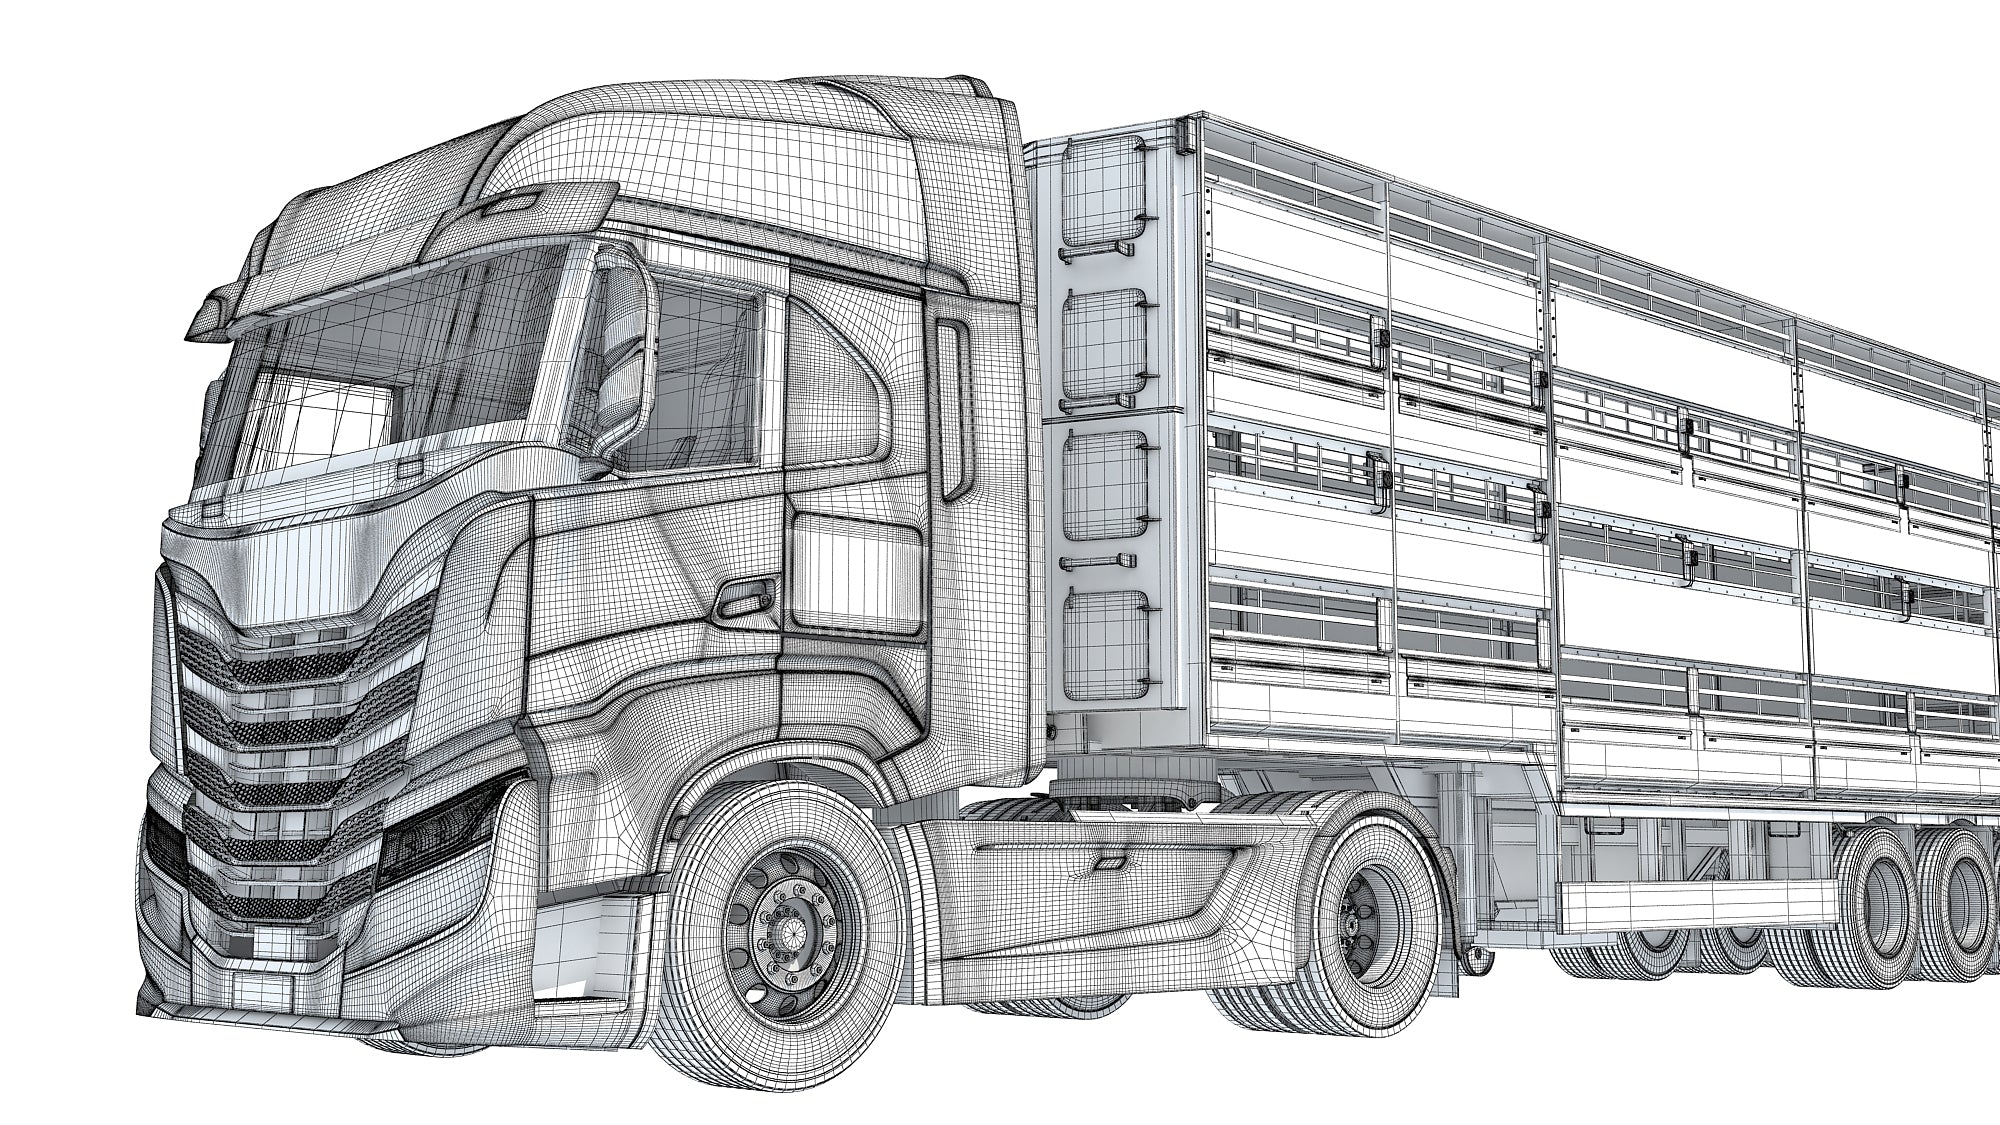 Animal Transporter Truck and Trailer